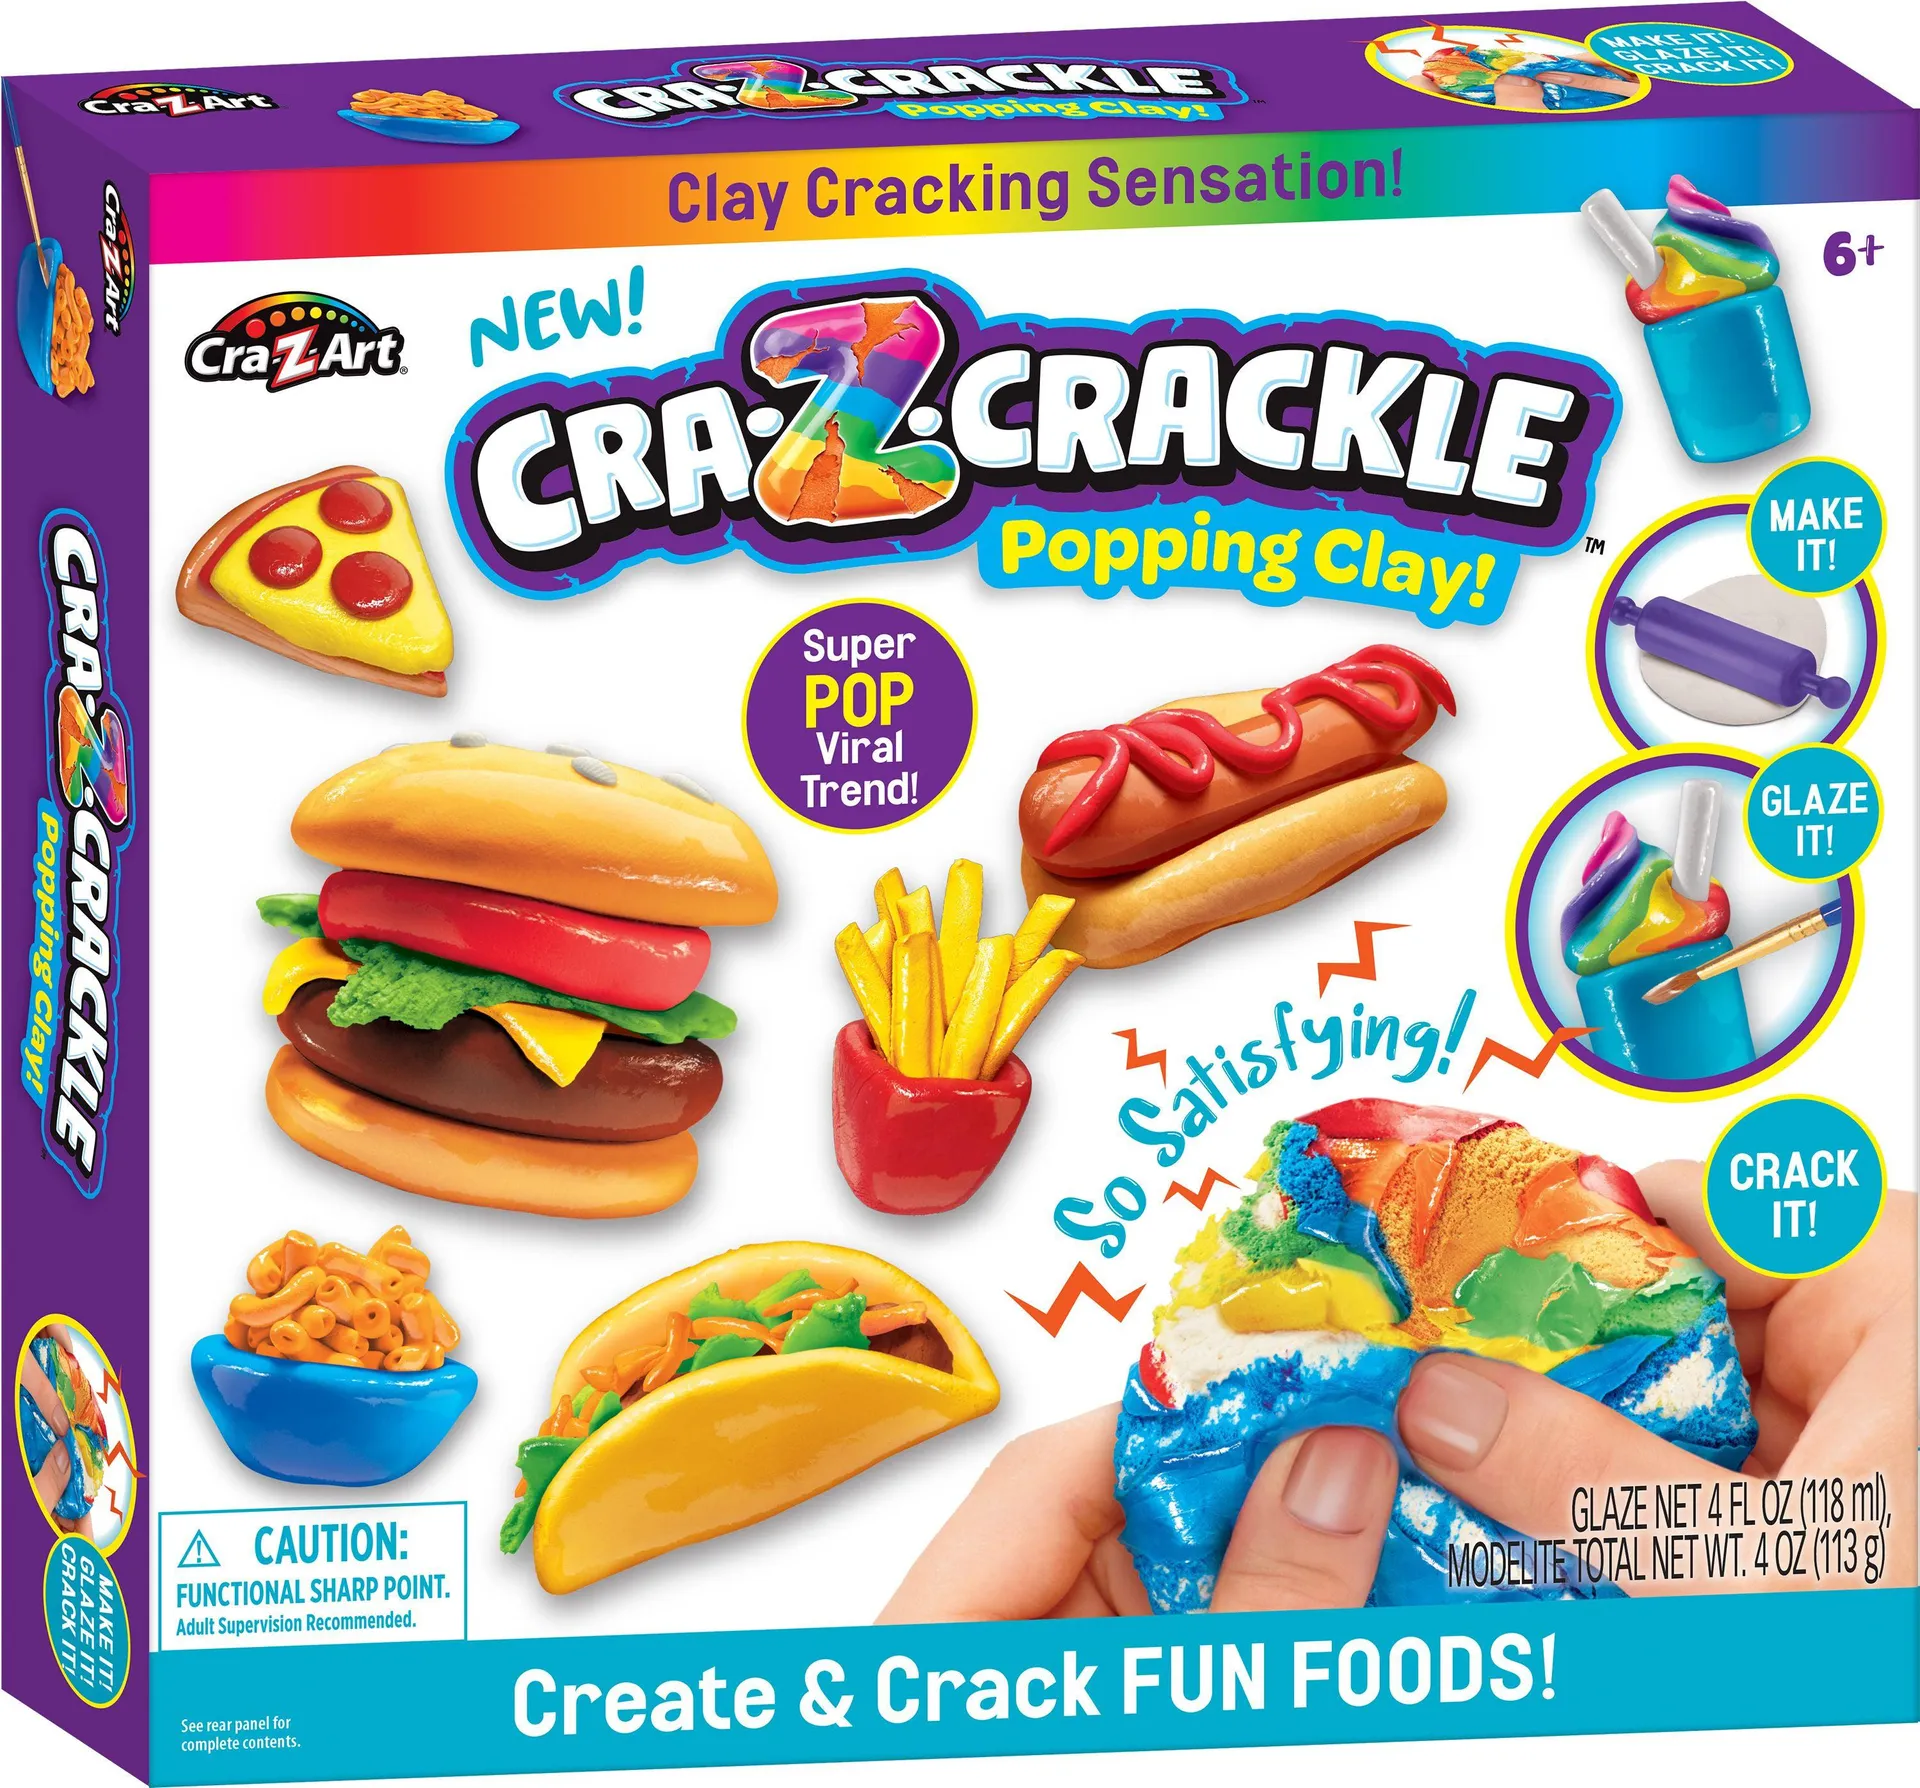 CRA-Z-ART CRA-Z-CRACKLE POPPING CLAY CREATE & CRACK FUN FOODS